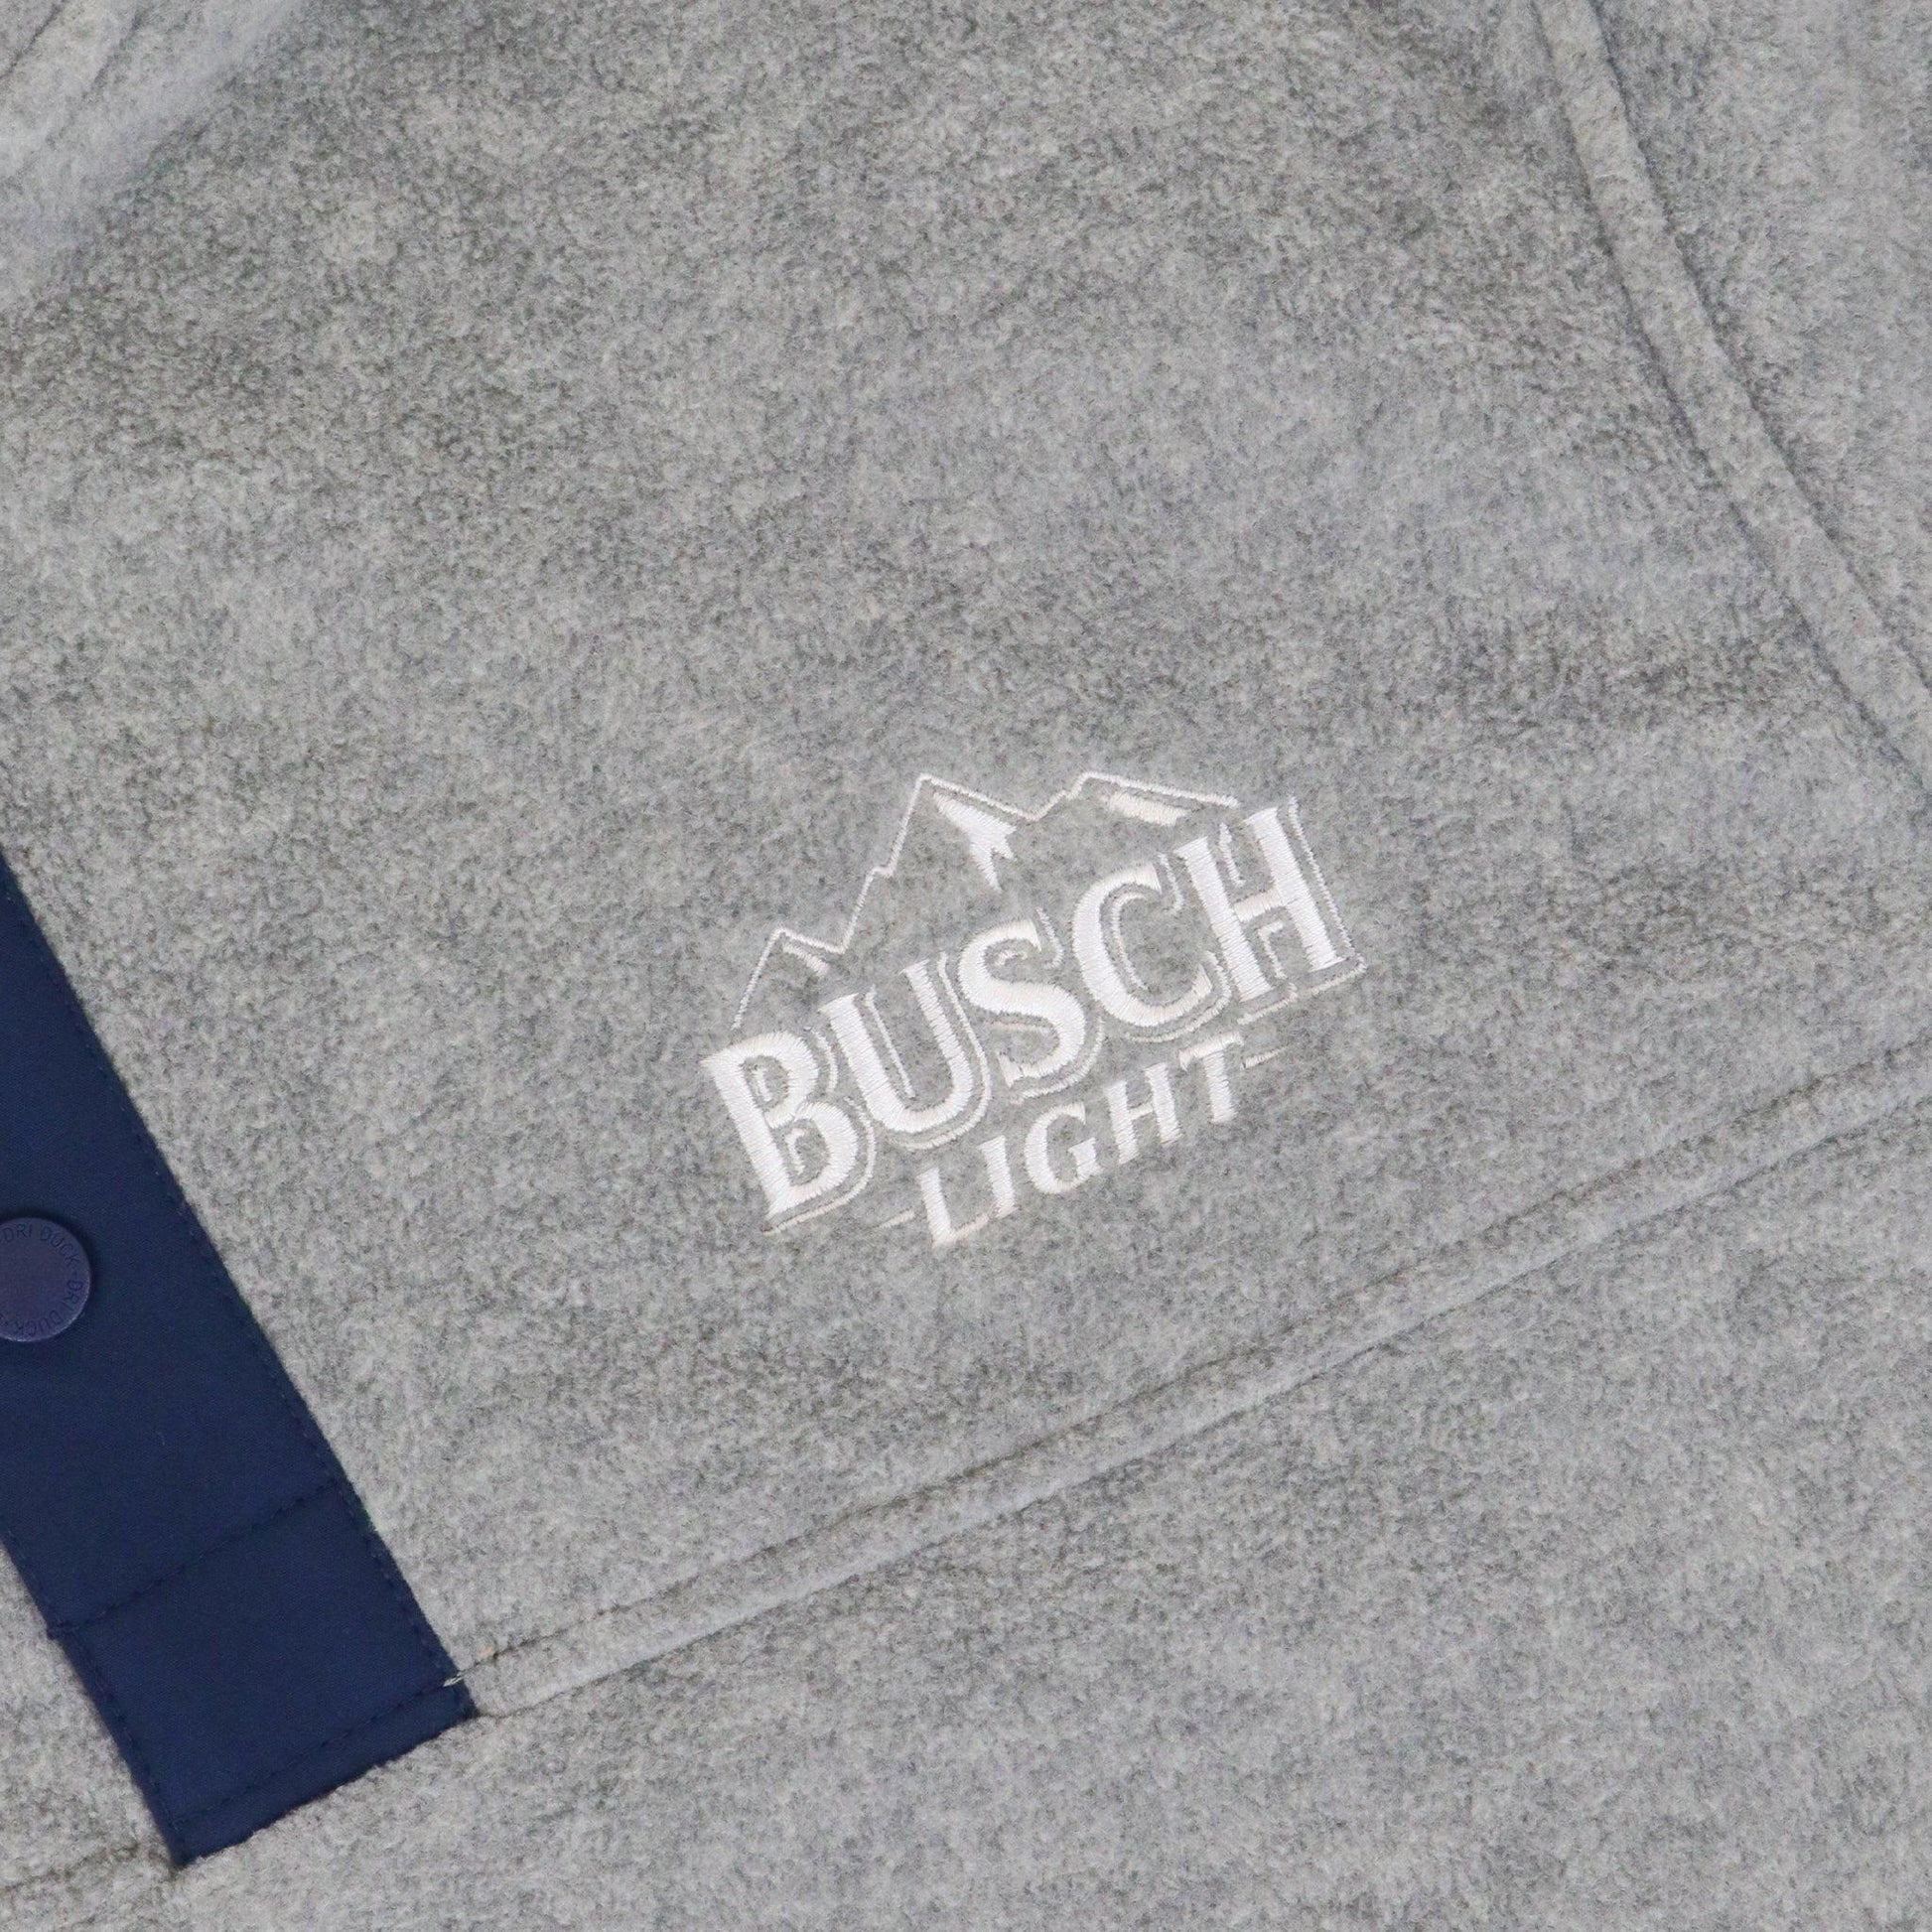 Close up of busch light logo on left chest